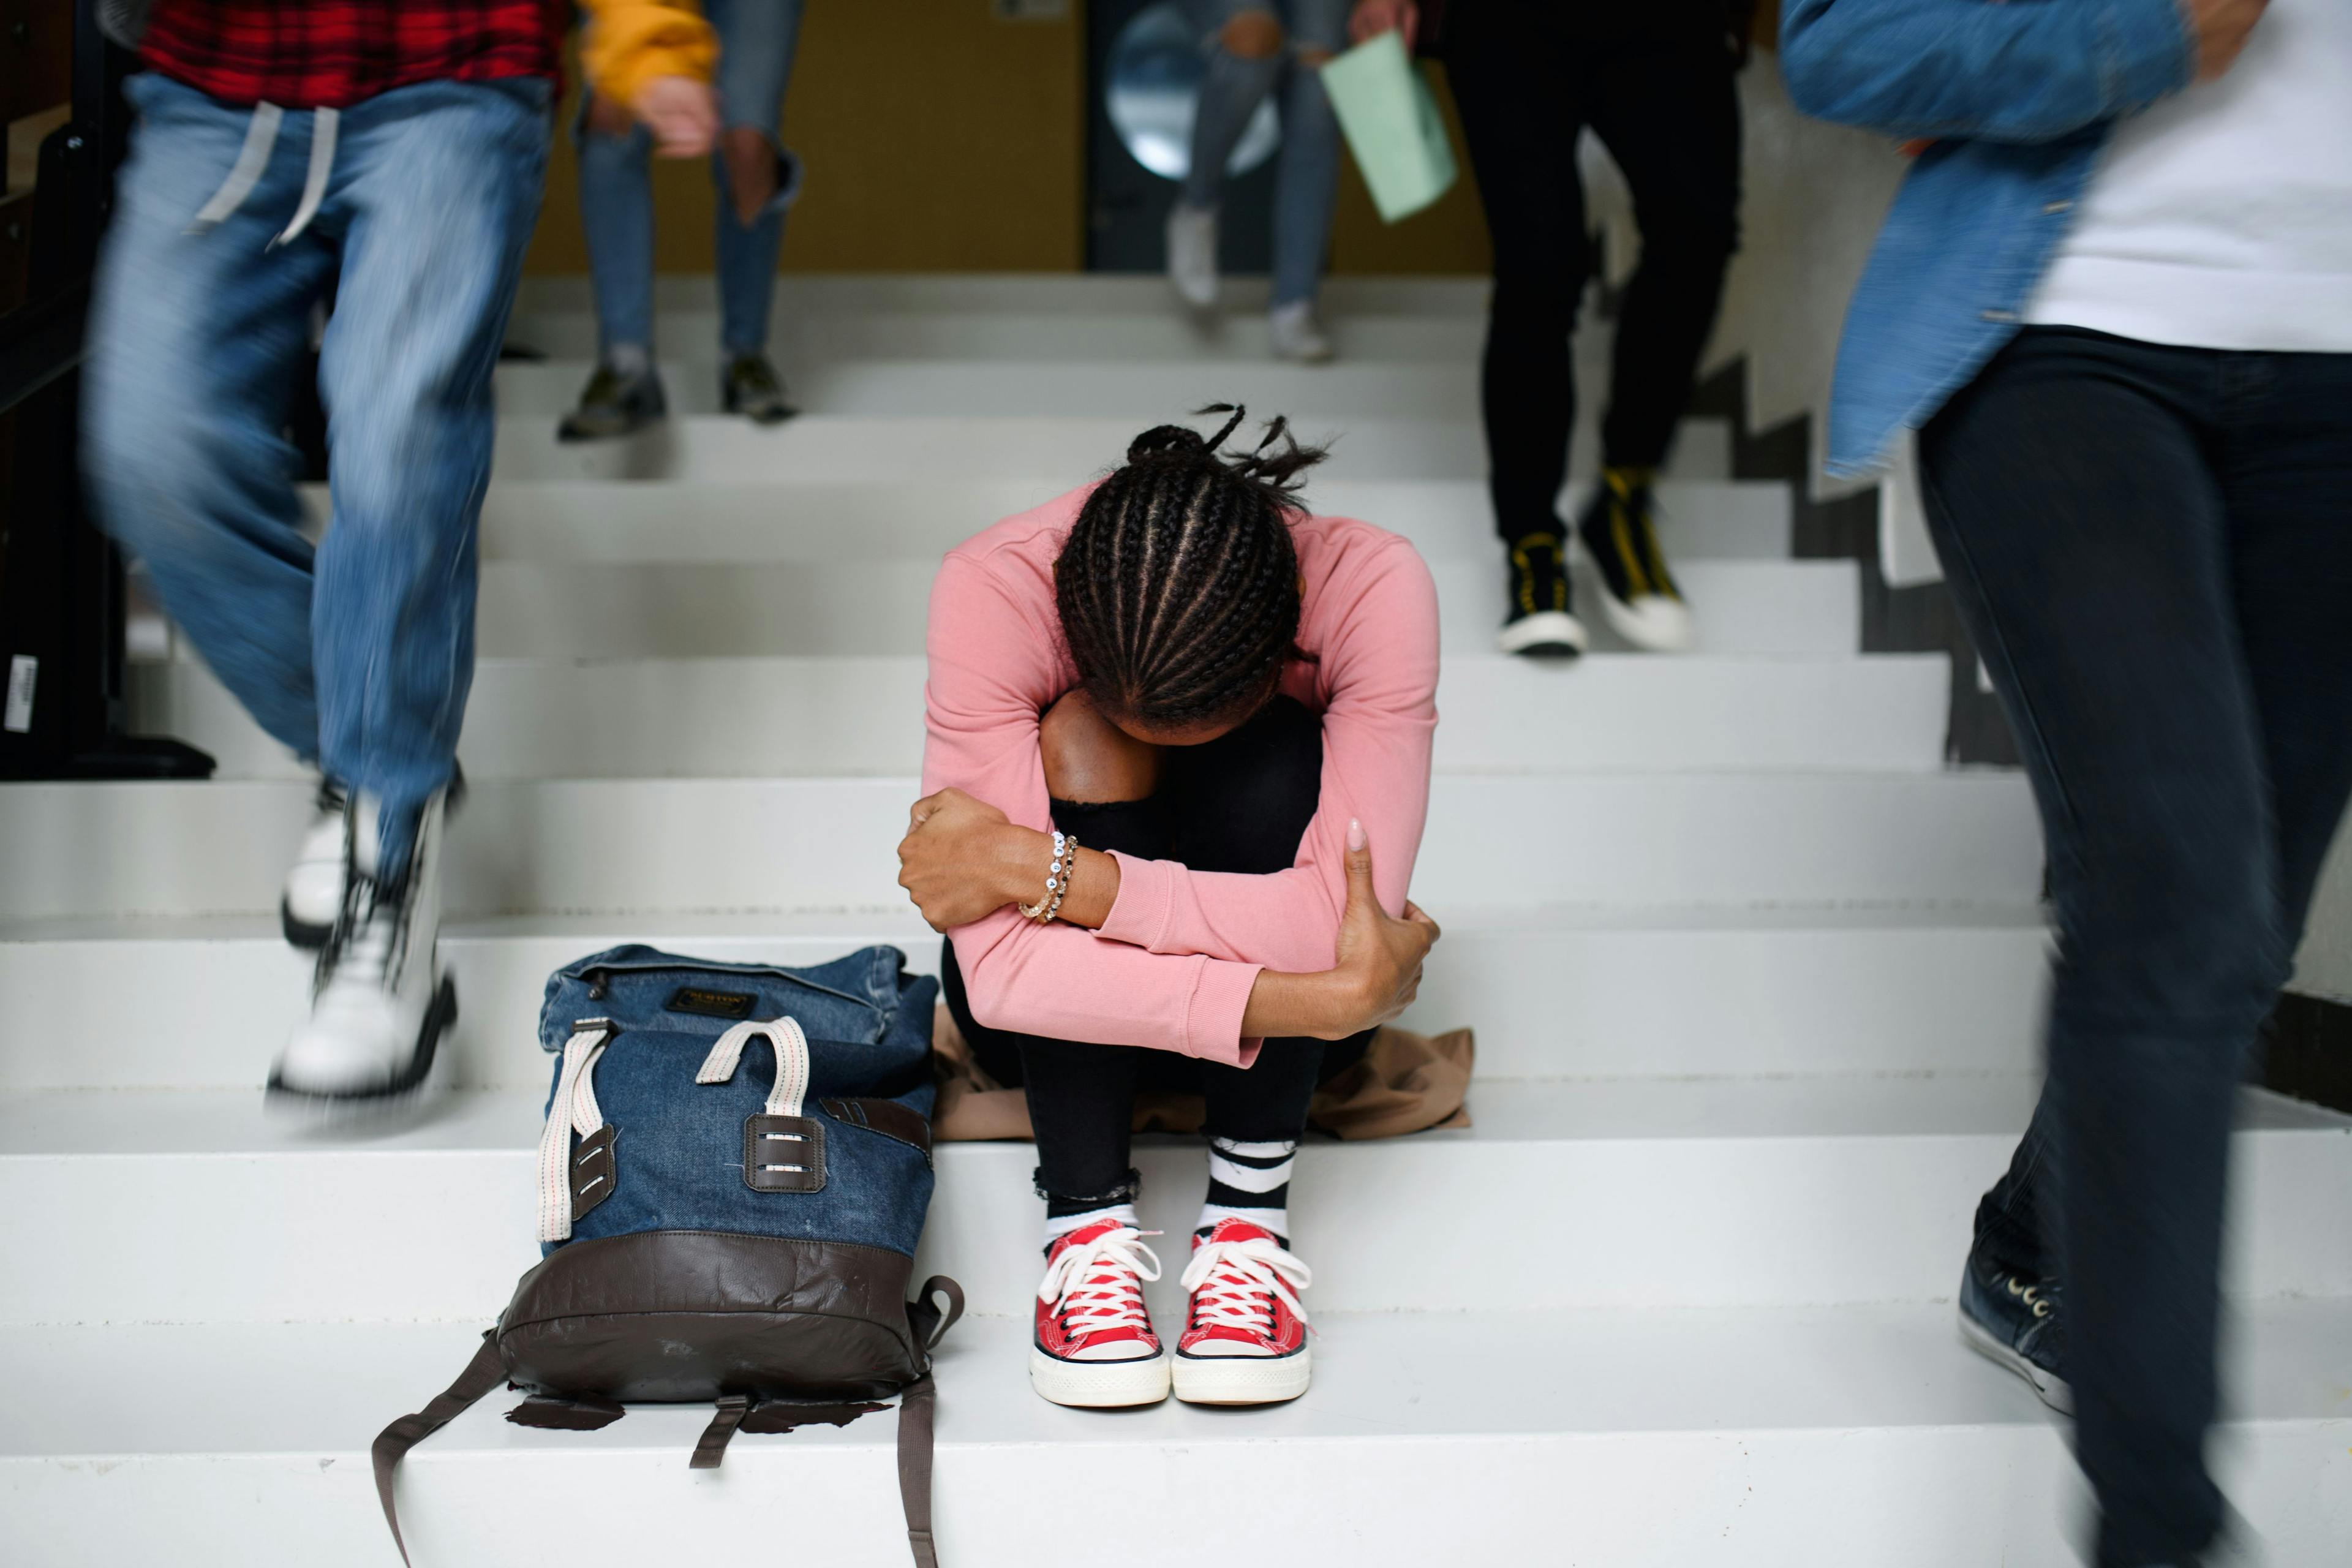 Depressed student image | Image credit: Halfpoint - stock.adobe.com